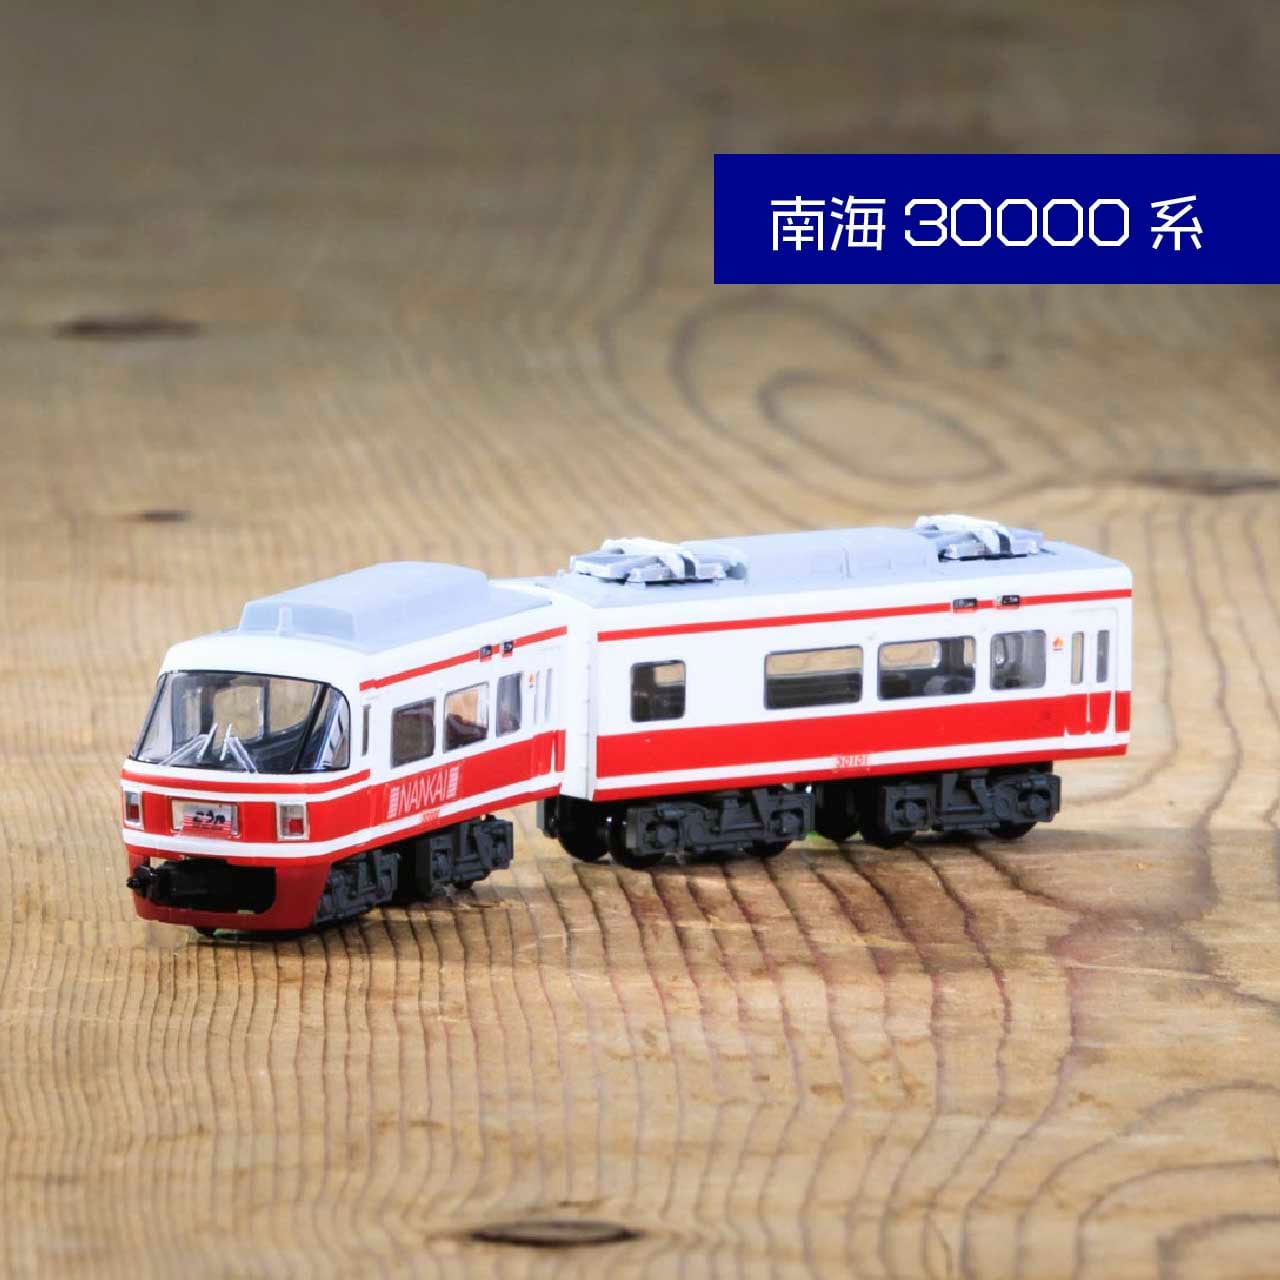 Nゲージ化 南海電気鉄道 8000系 4両編成セット - 鉄道模型